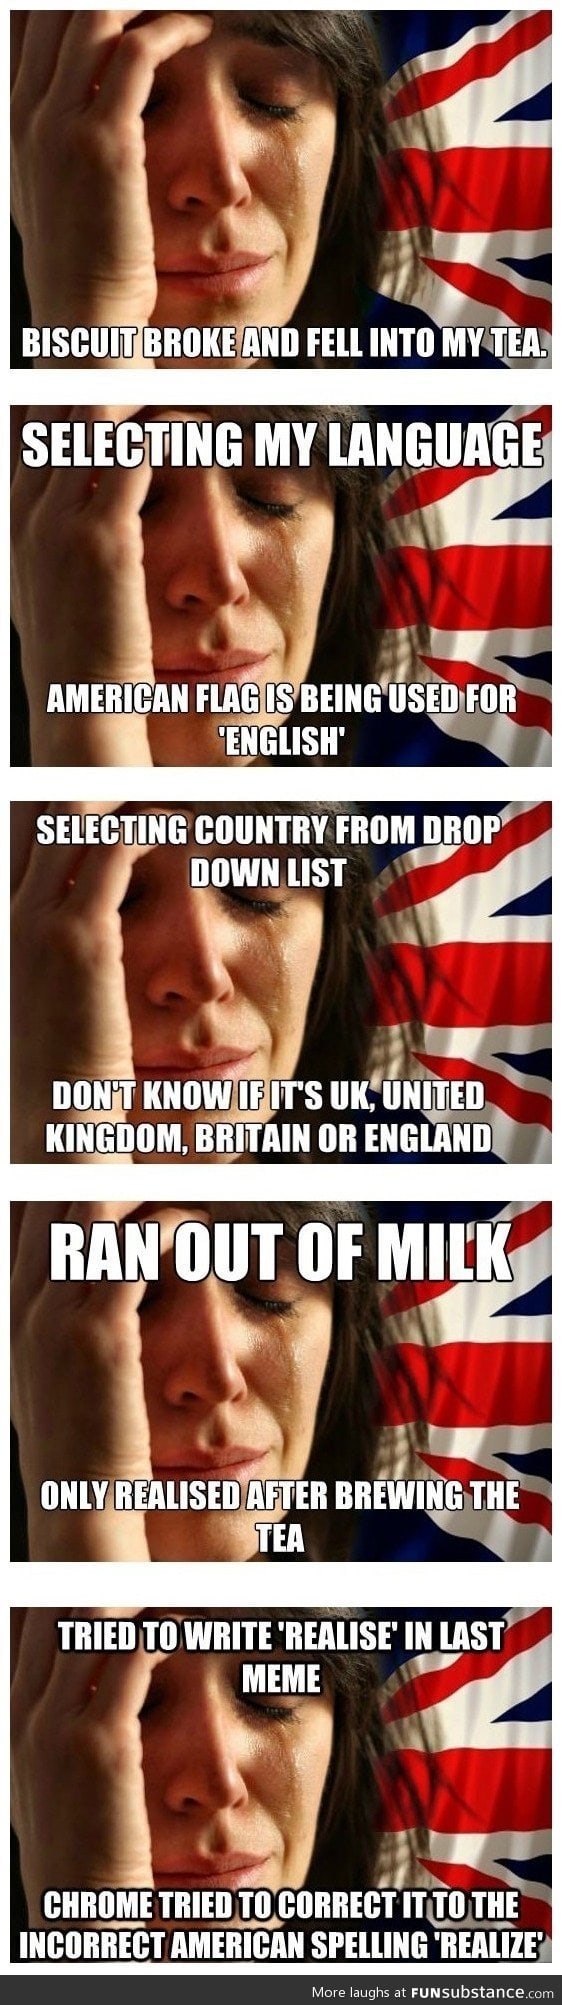 British problems